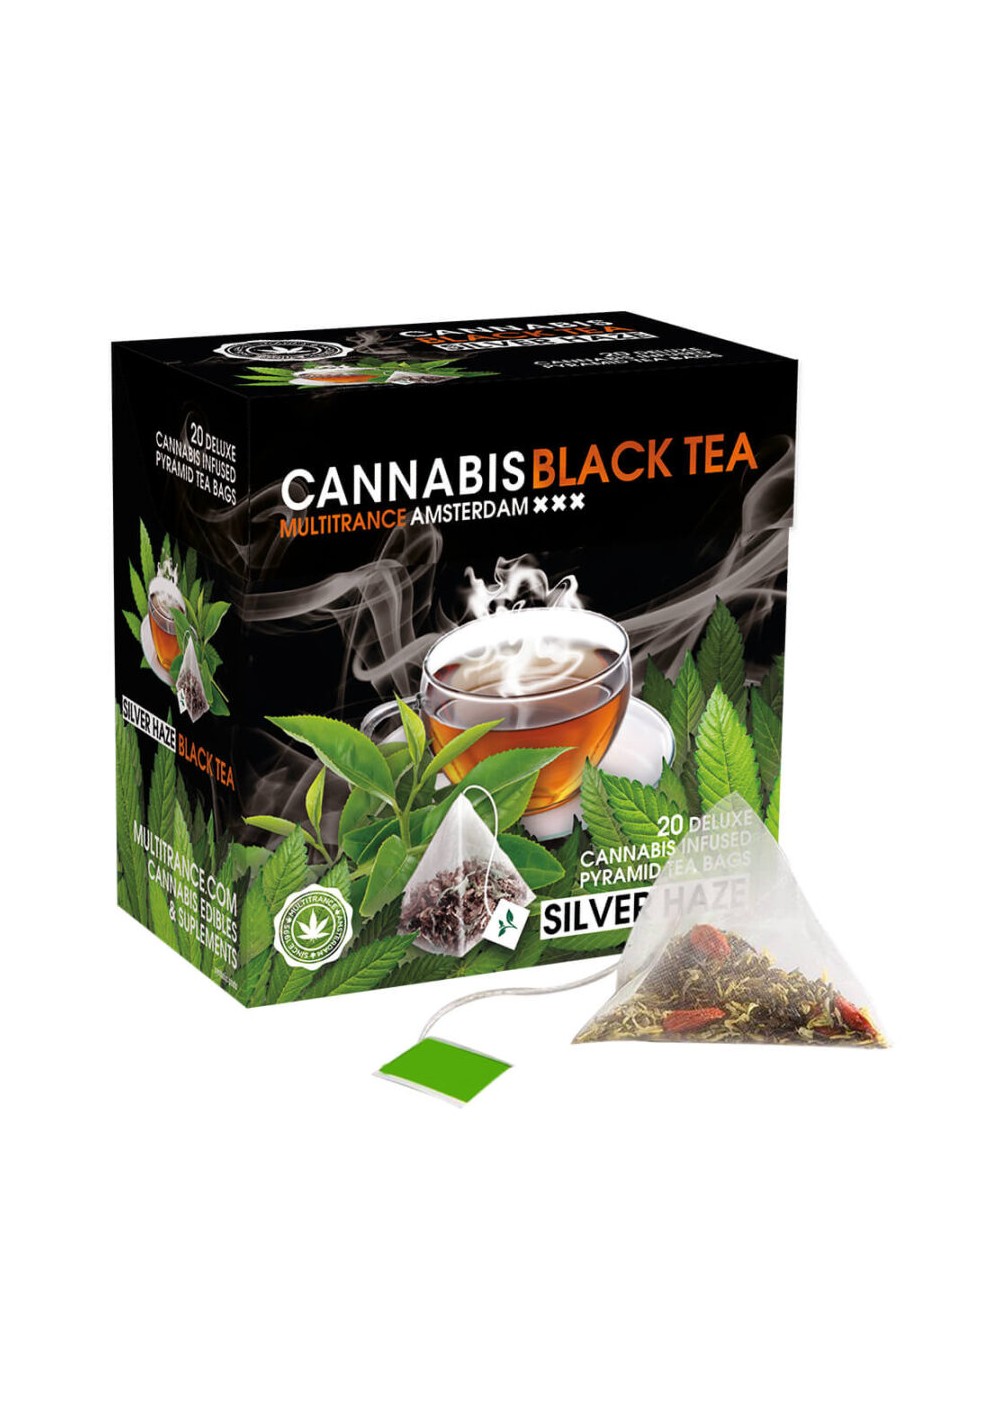 Cannabis Black Tea Silver Haze - CBD 7.5mg per Bag - 20 Pyramid bags - Multitrance